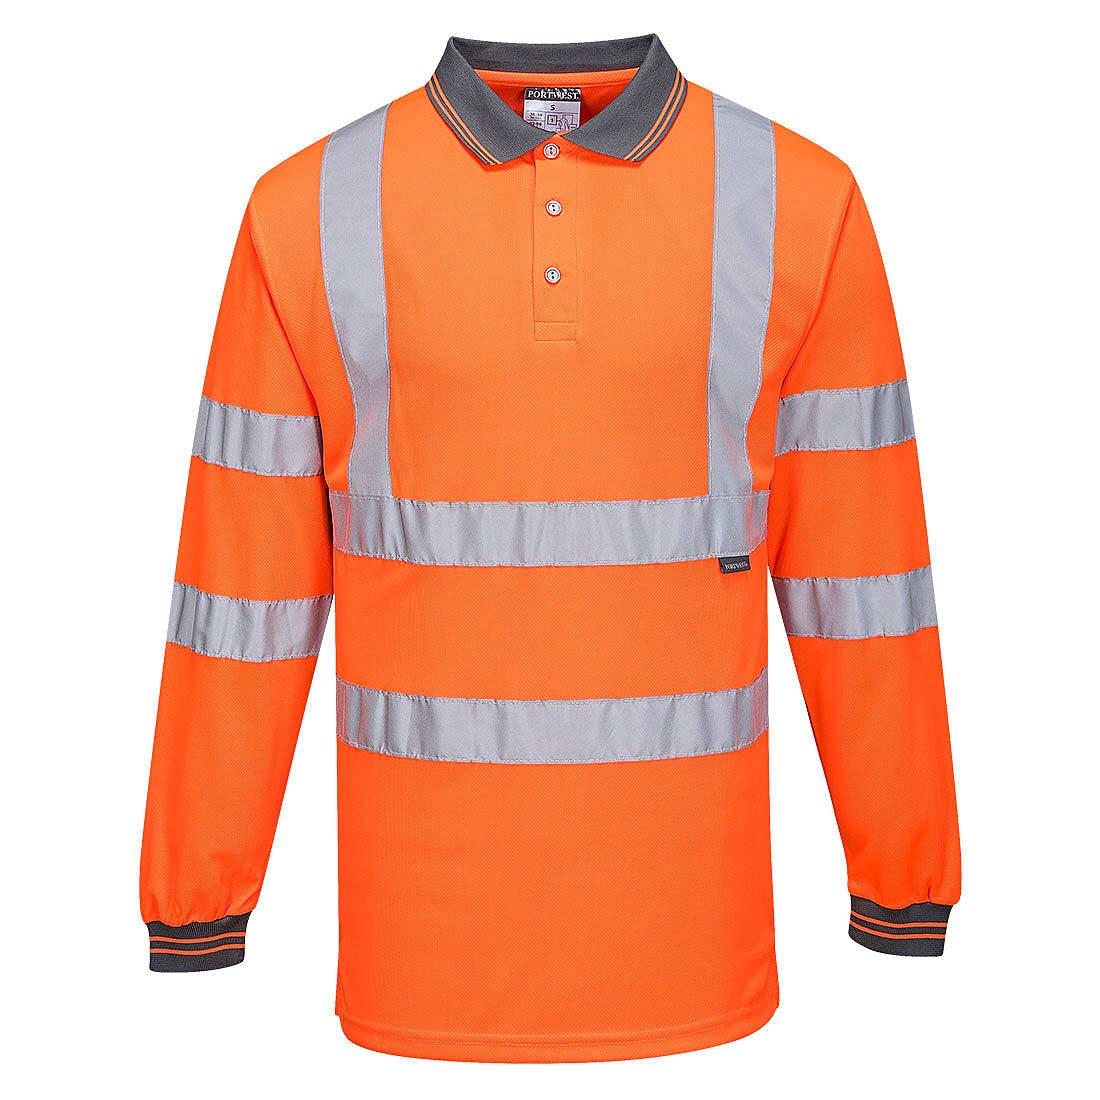 Portwest Hi-Viz Long-Sleeved Polo Shirt in Orange (Product Code: S277)